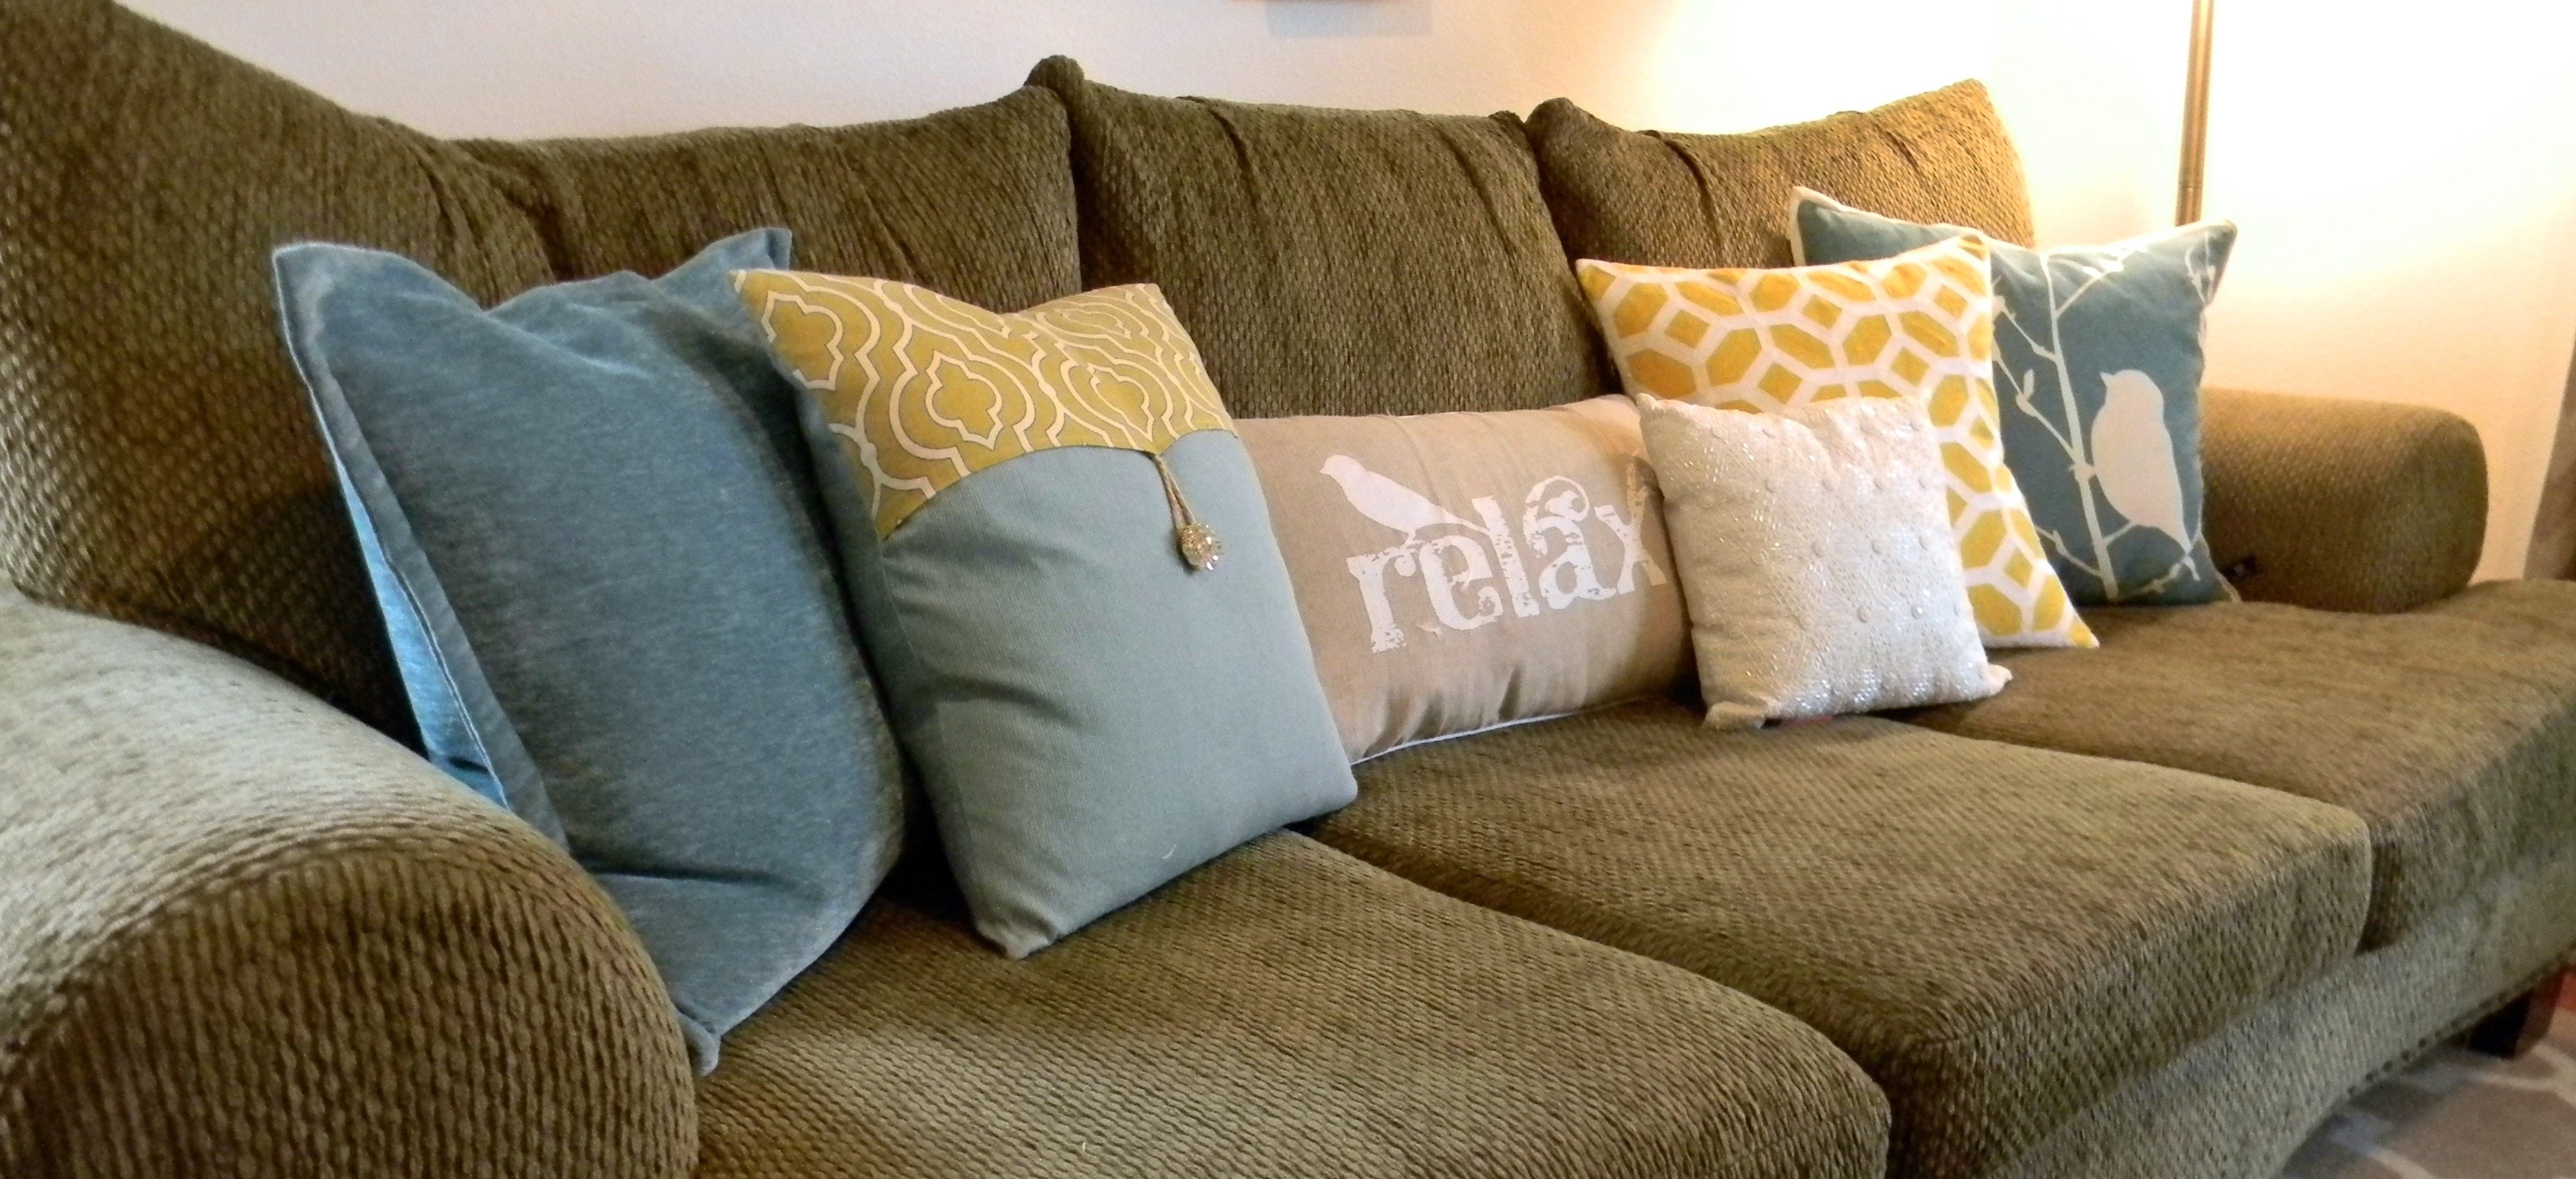 10 Elegant Throw Pillows For Couch Ideas decorative pillows ideas make a photo gallery photo of throw pillows 2023